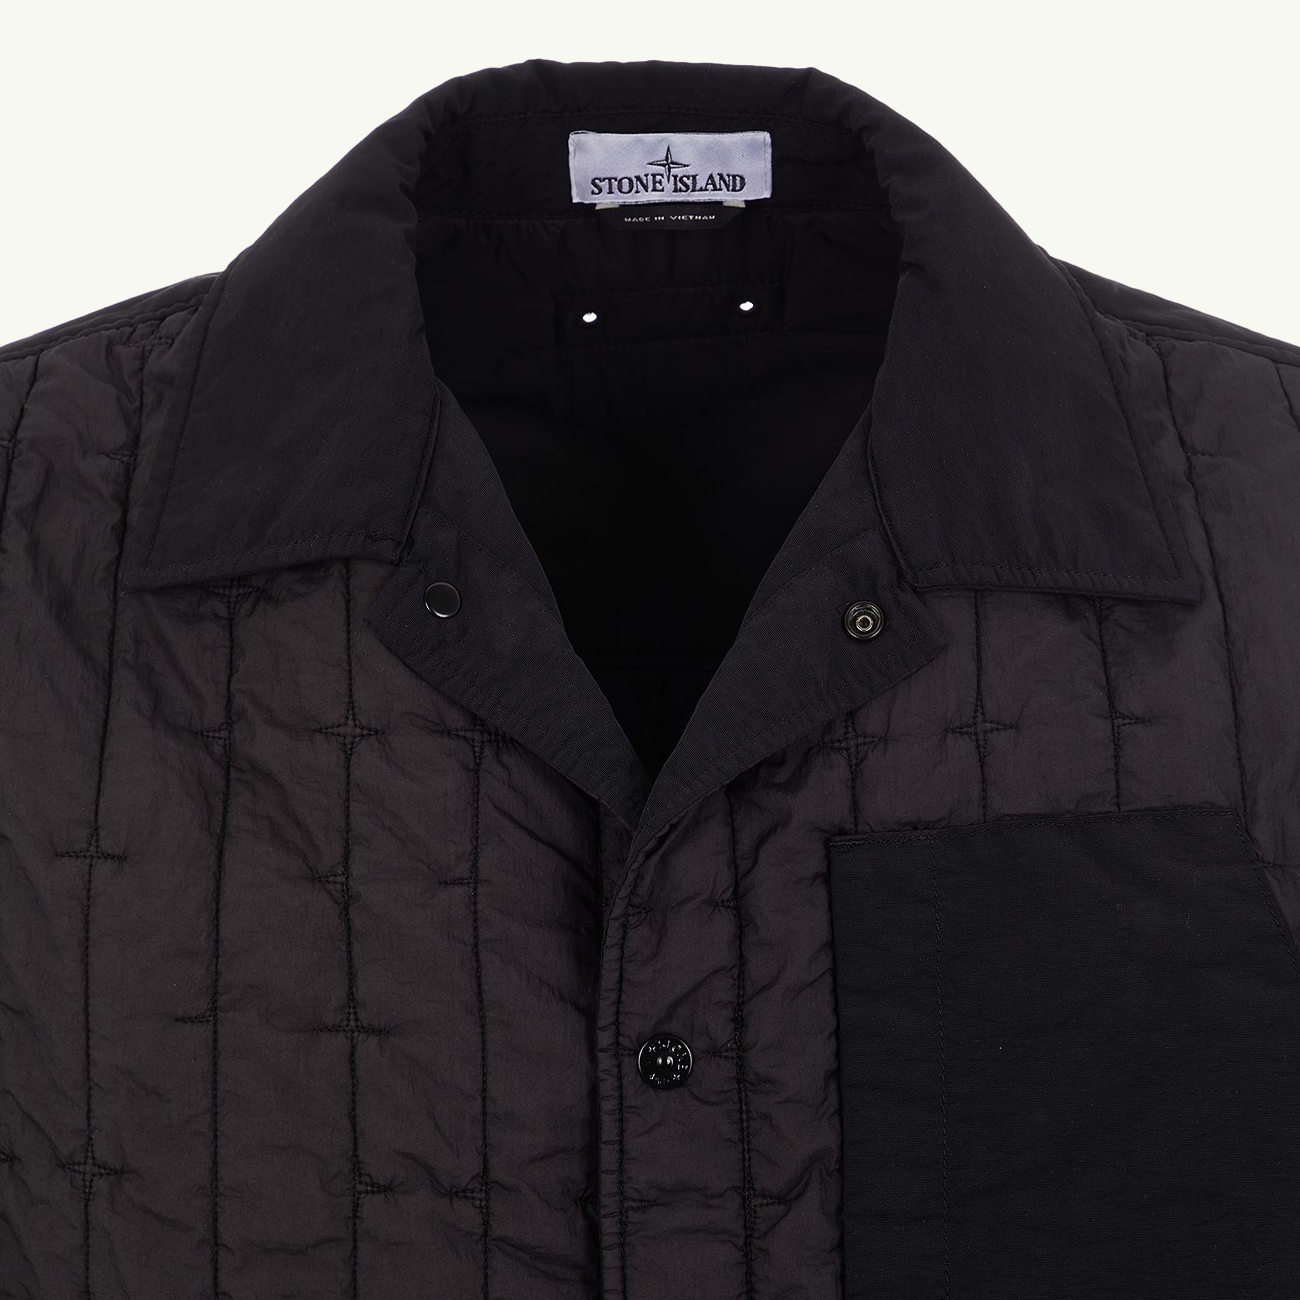 Jacket Patch Quilted Nylon Primaloft - Black 2980